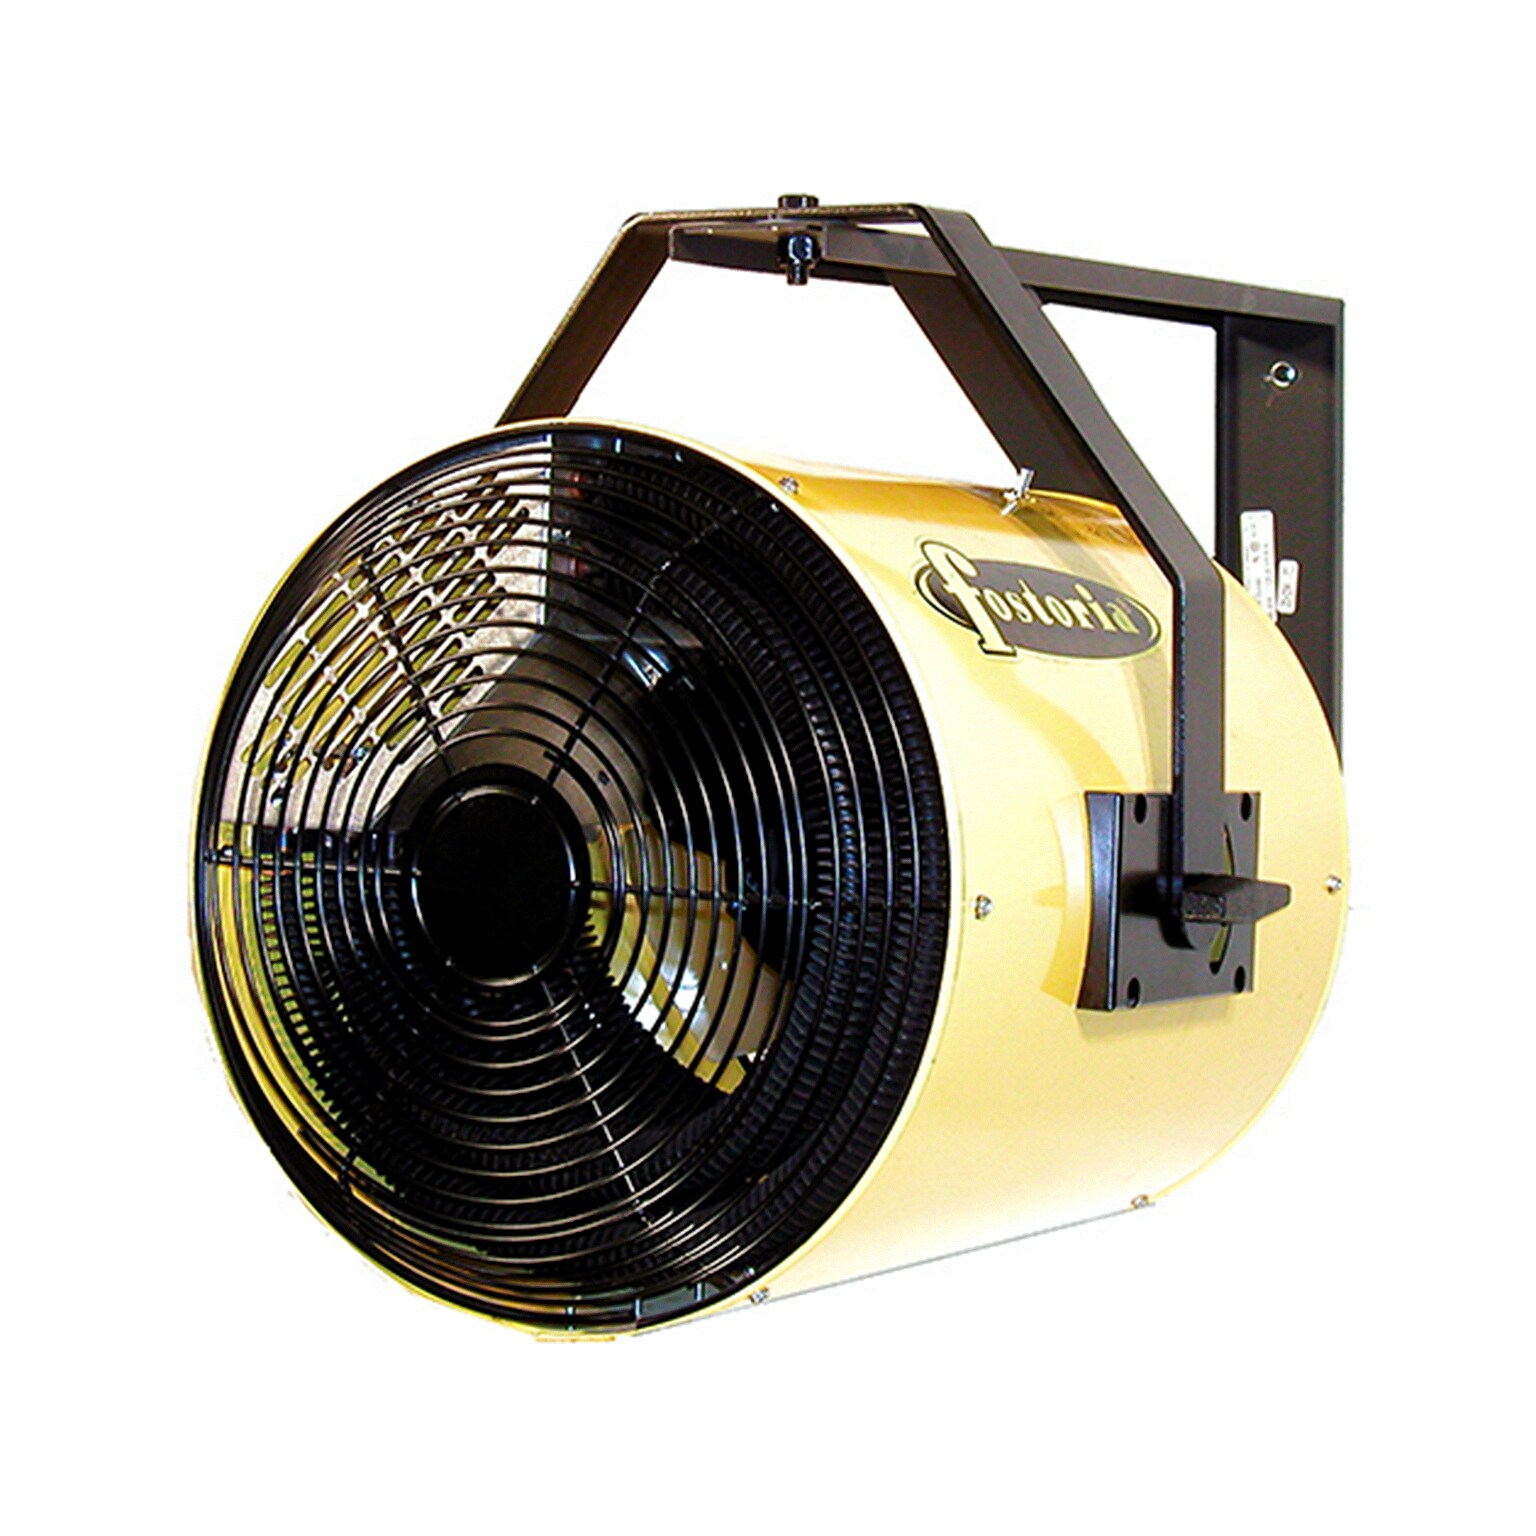 TPI Corporation Fostoria YES 30000-Watt 102390 BTU Electric Heater, Yellow/Black (08861210)